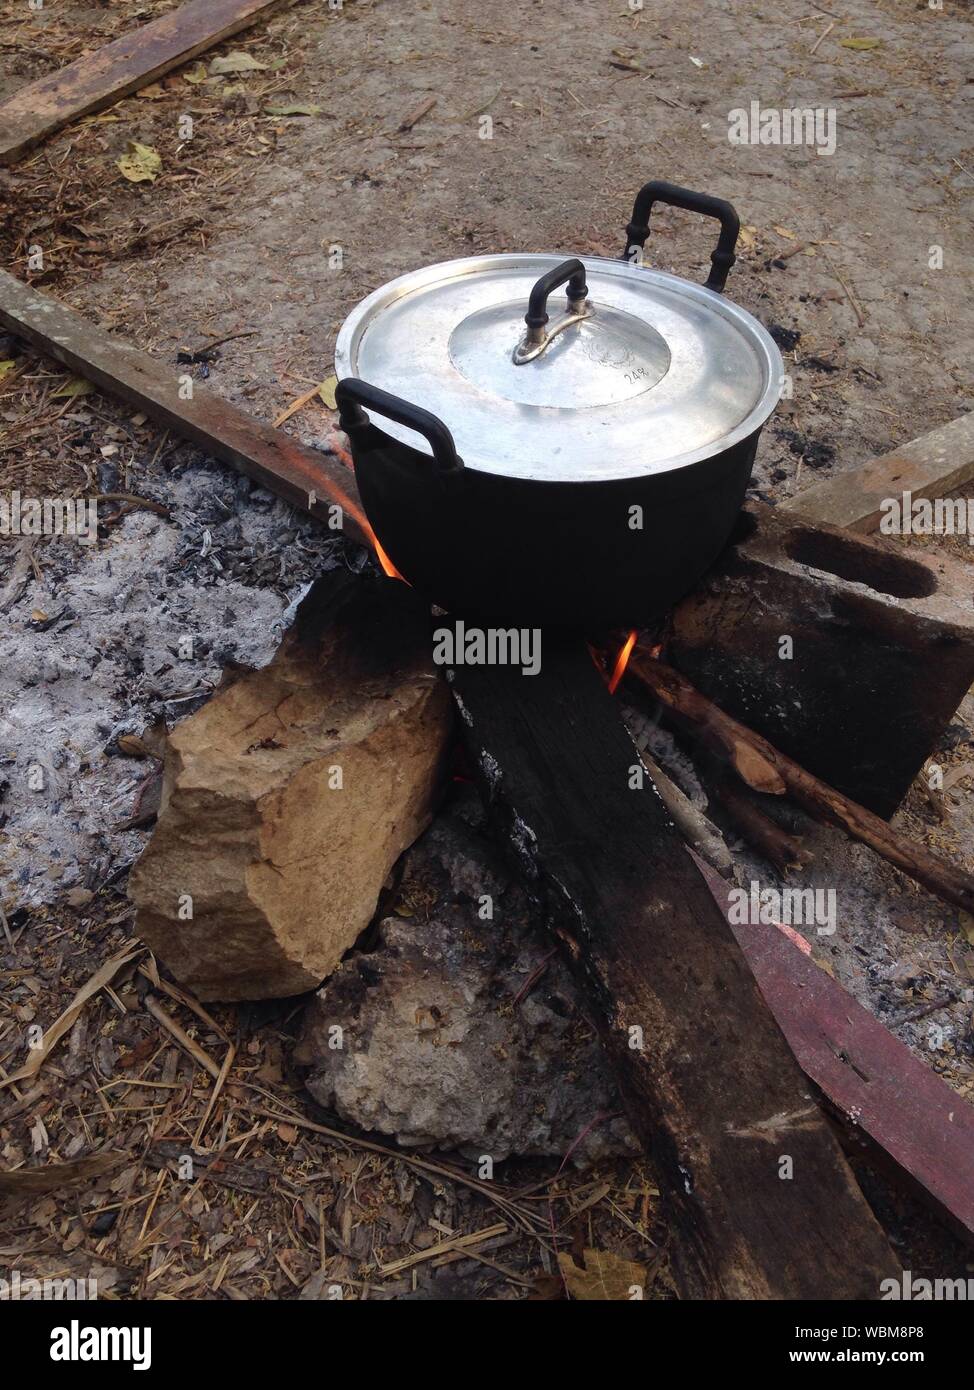 High Angle View Of Food Preparation On Wood Burning Stove Stock Photo